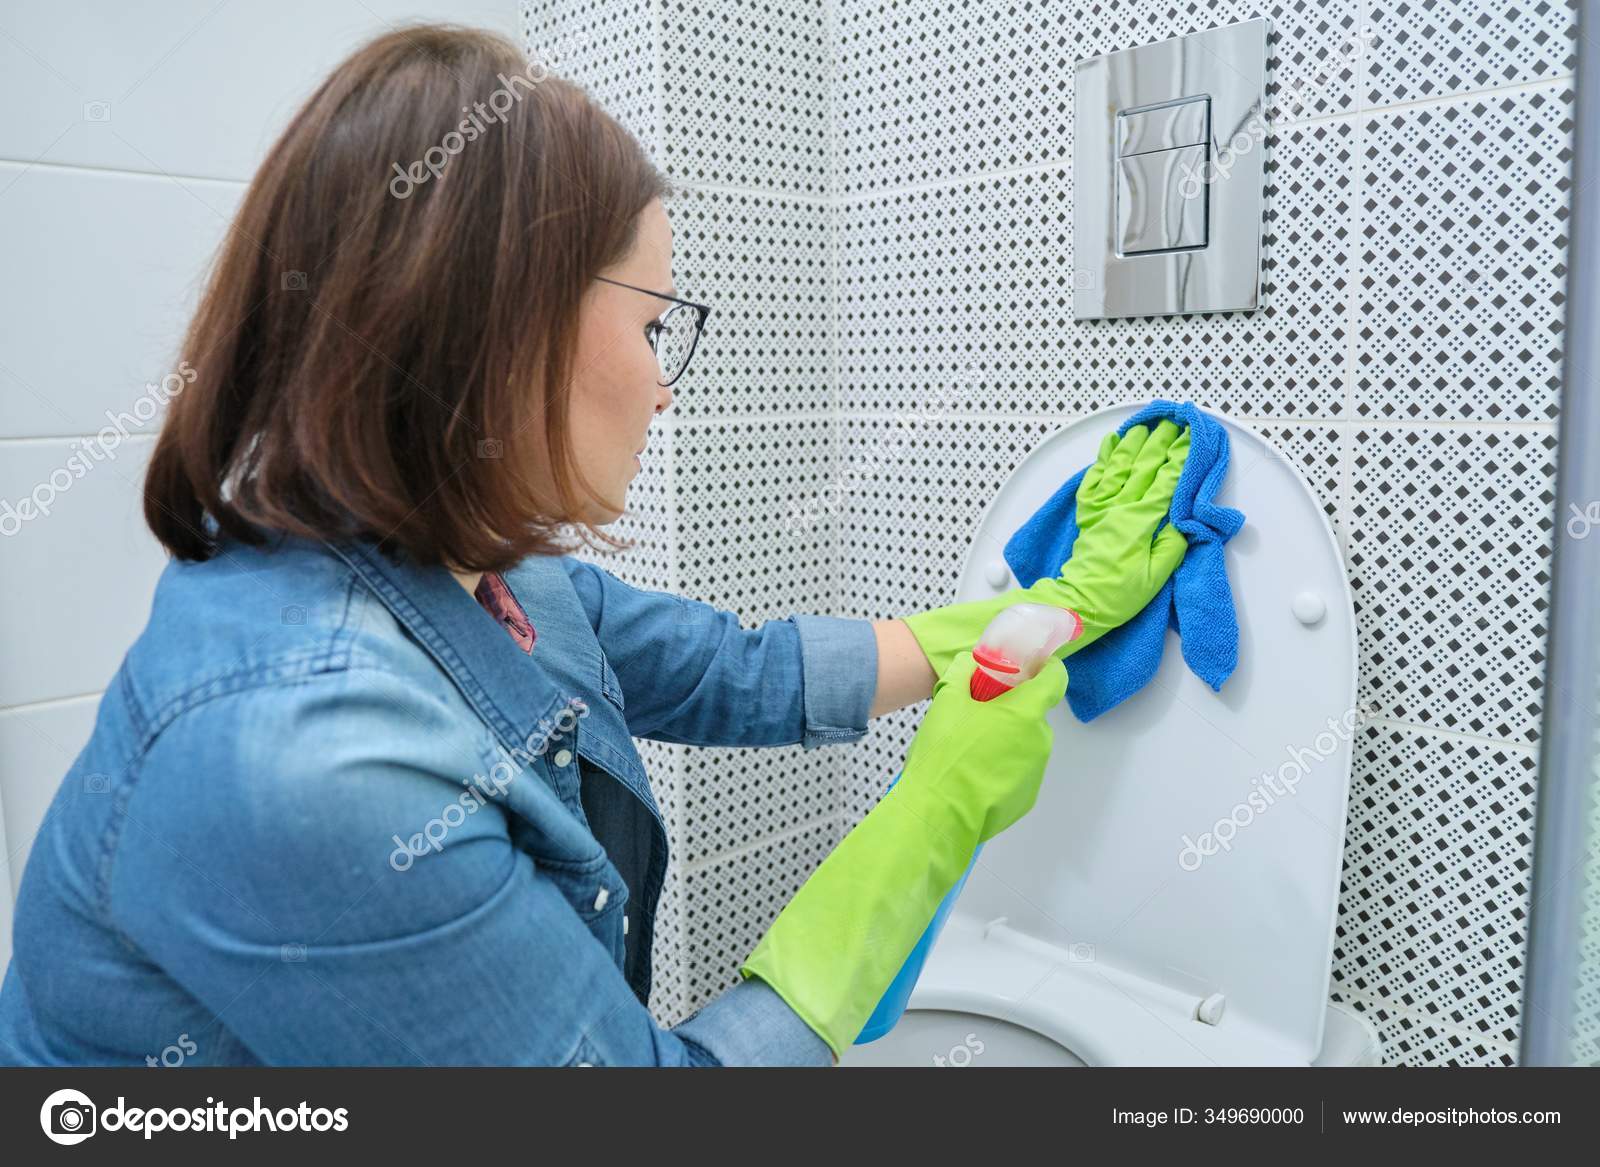 https://st3.depositphotos.com/10932024/34969/i/1600/depositphotos_349690000-stock-photo-woman-in-gloves-with-rag.jpg